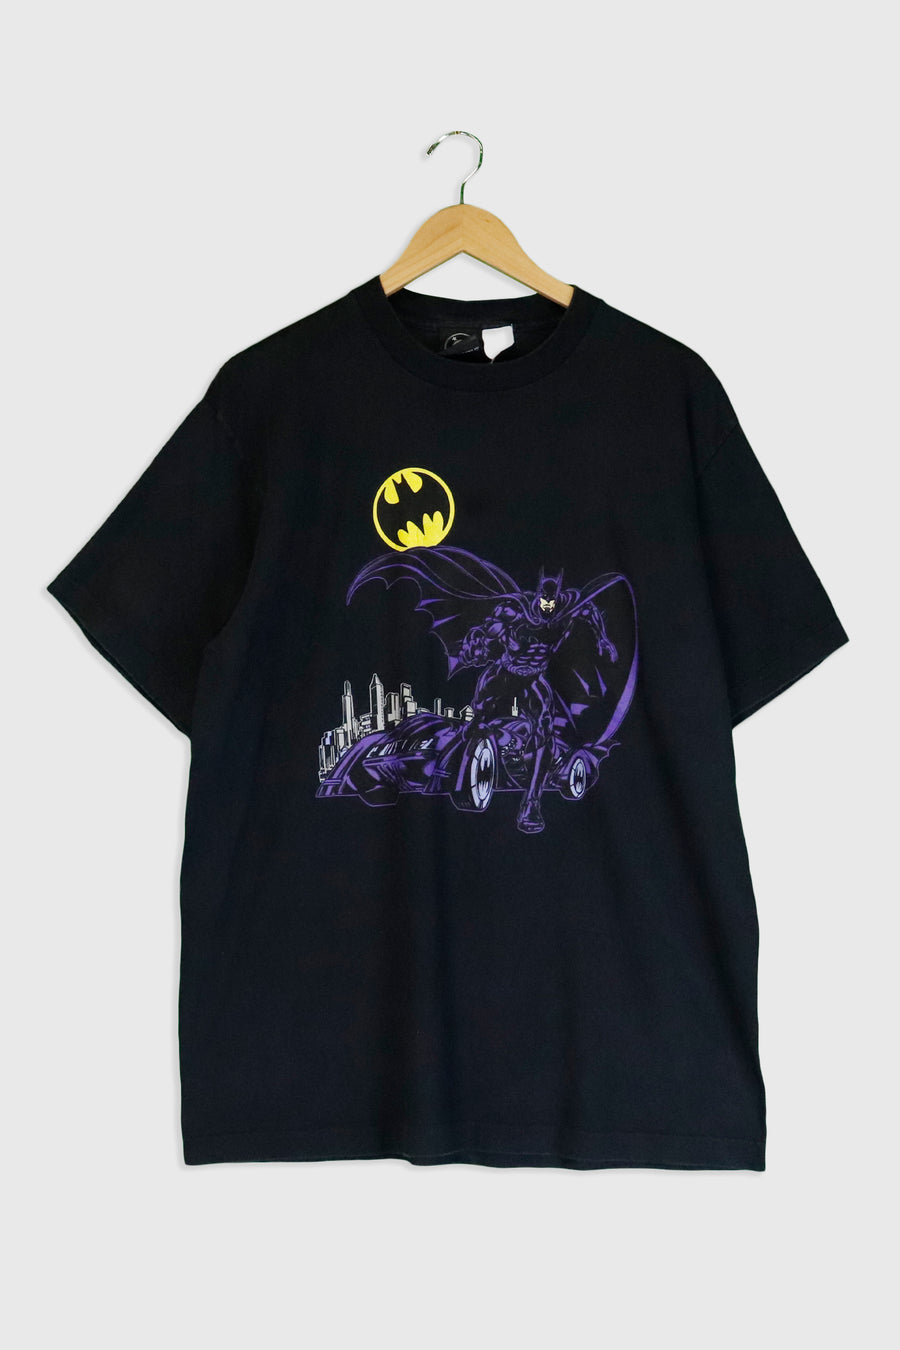 Vintage DC Comics Batman Bat Signal T Shirt Sz XL